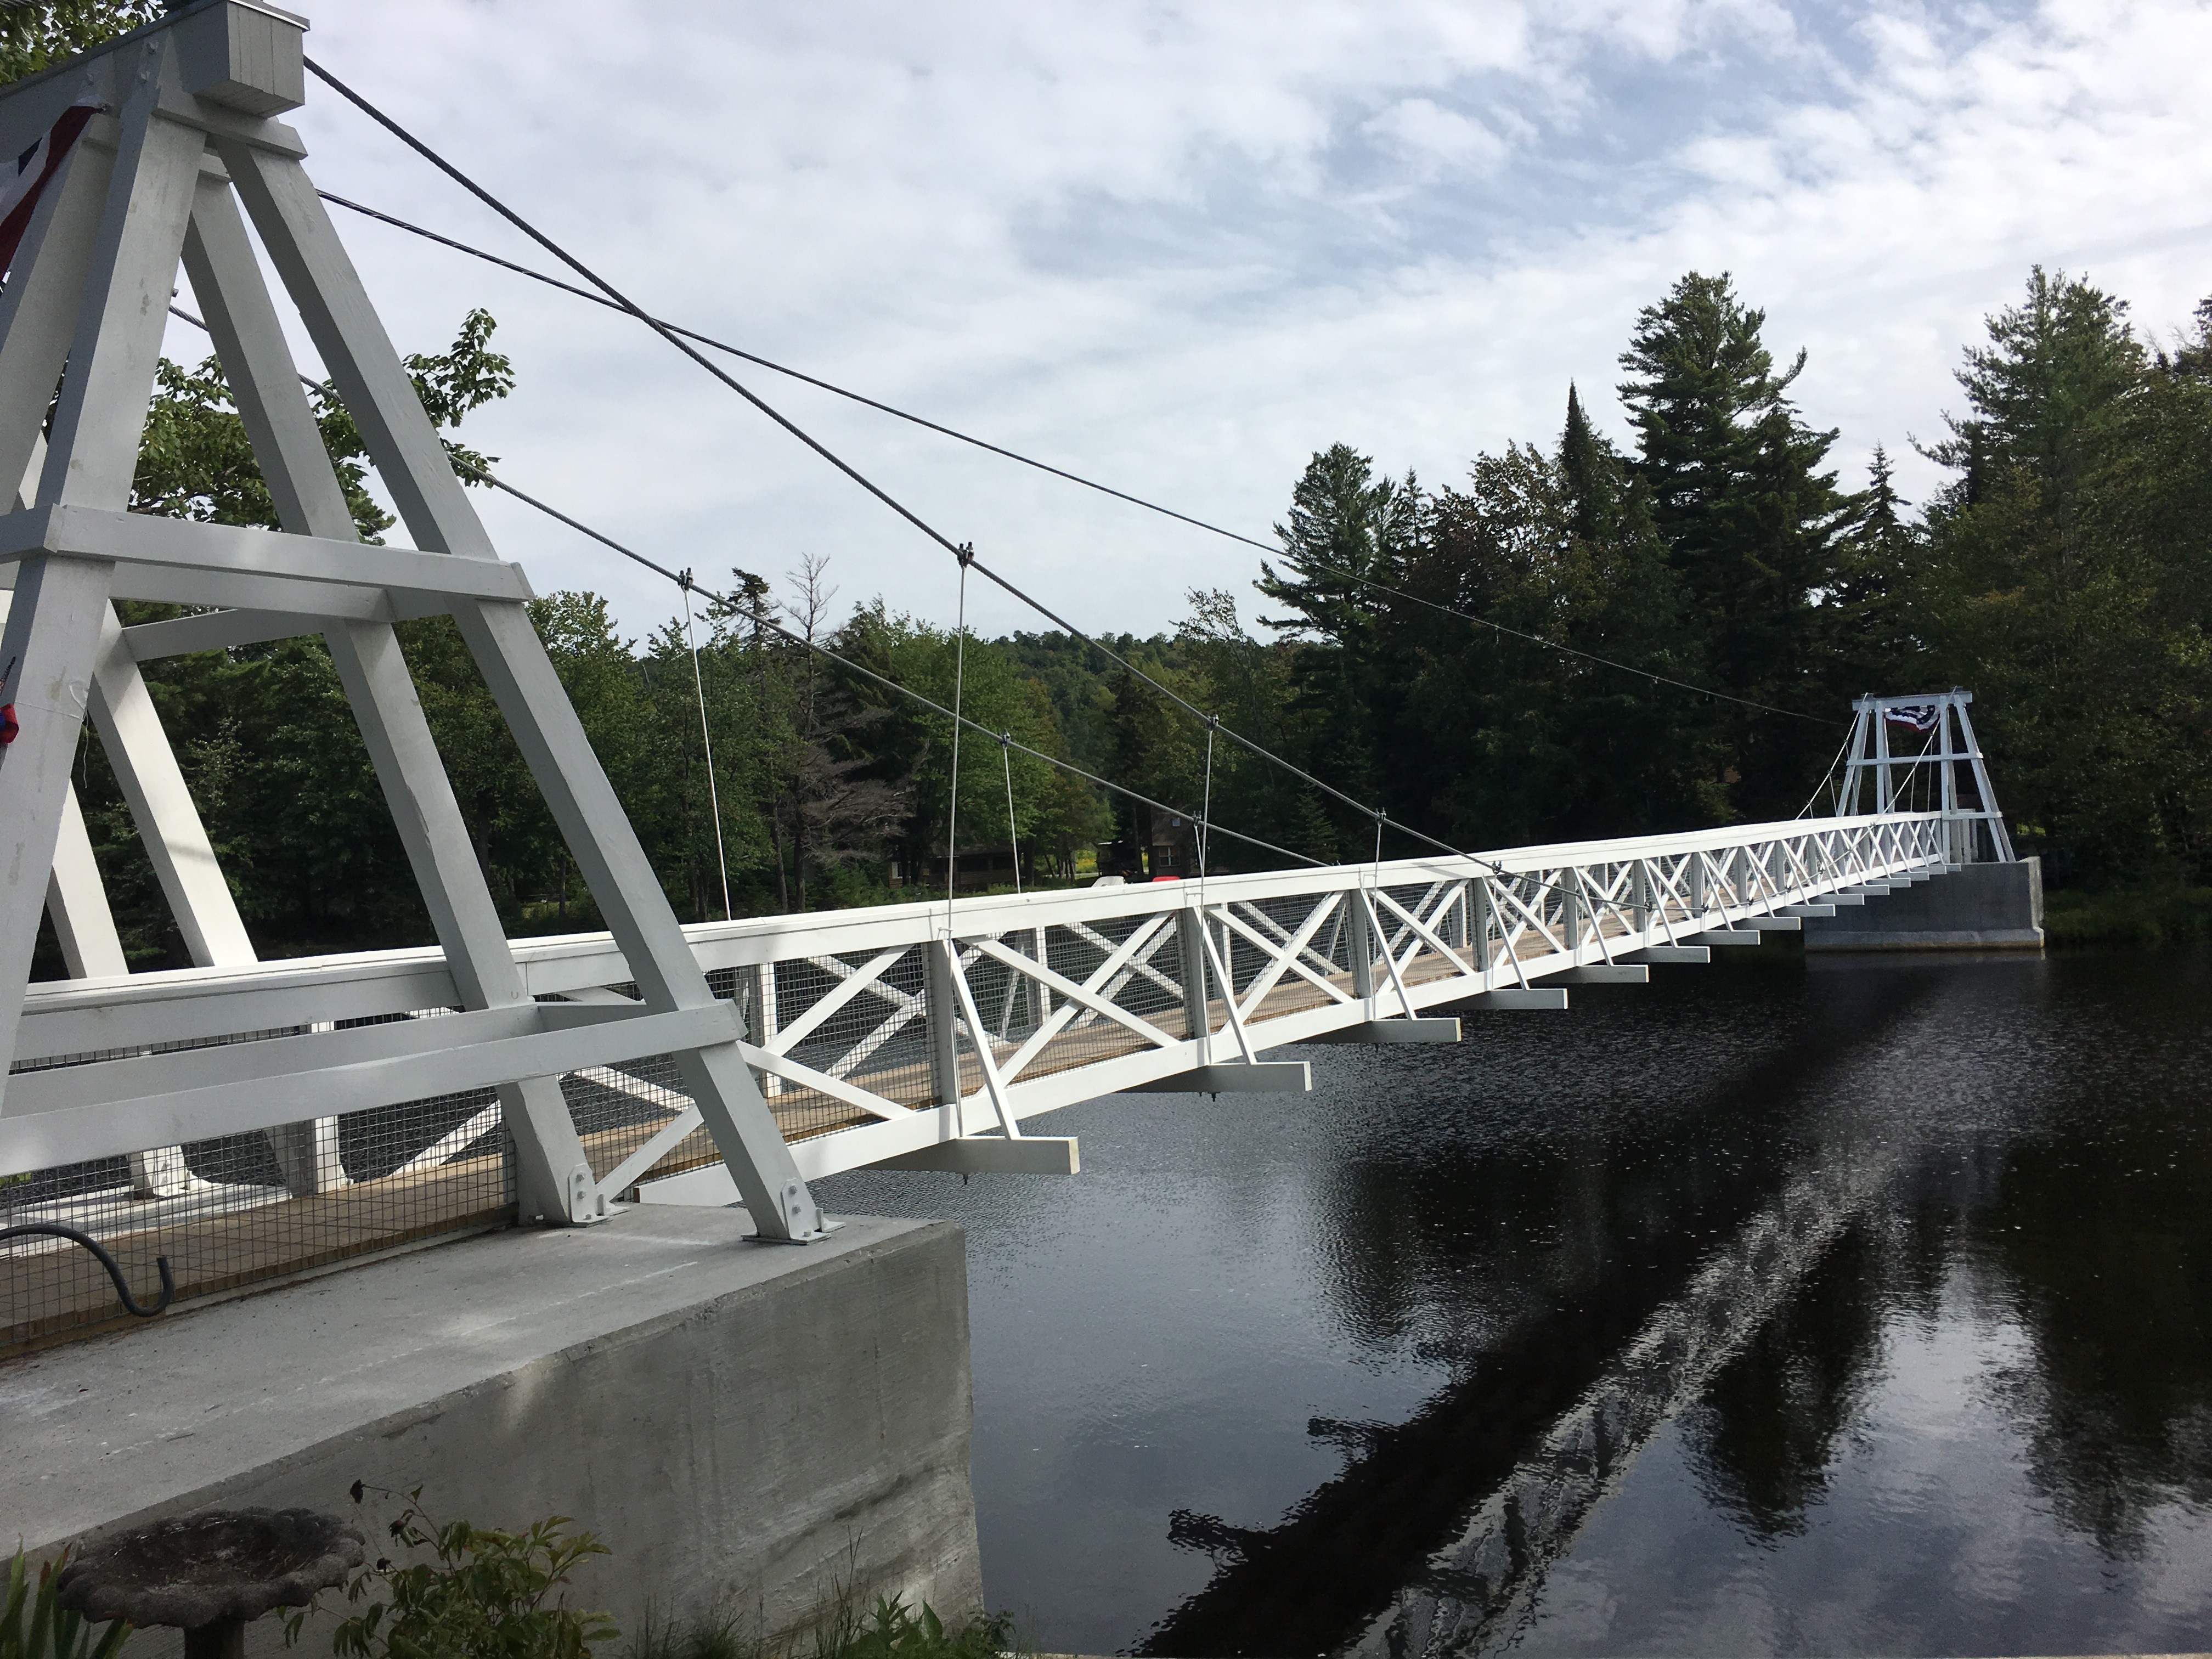 Photo: The new bridge in Wanakena - Cranberry Lake Boat Club